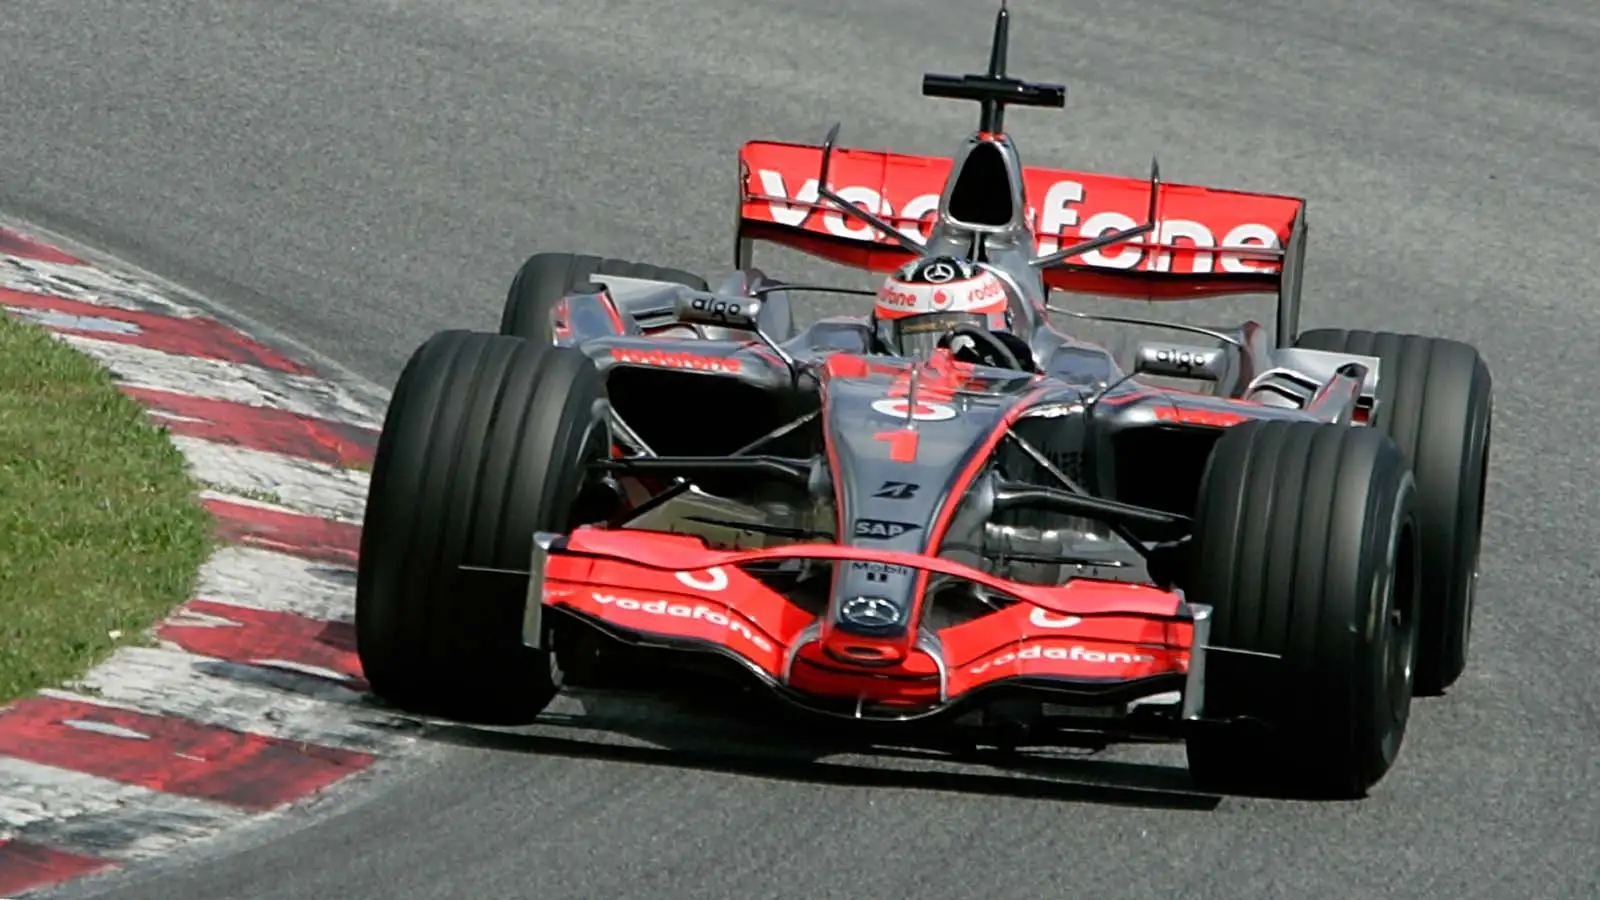 Fernando Alonso drives for McLaren in 2007.